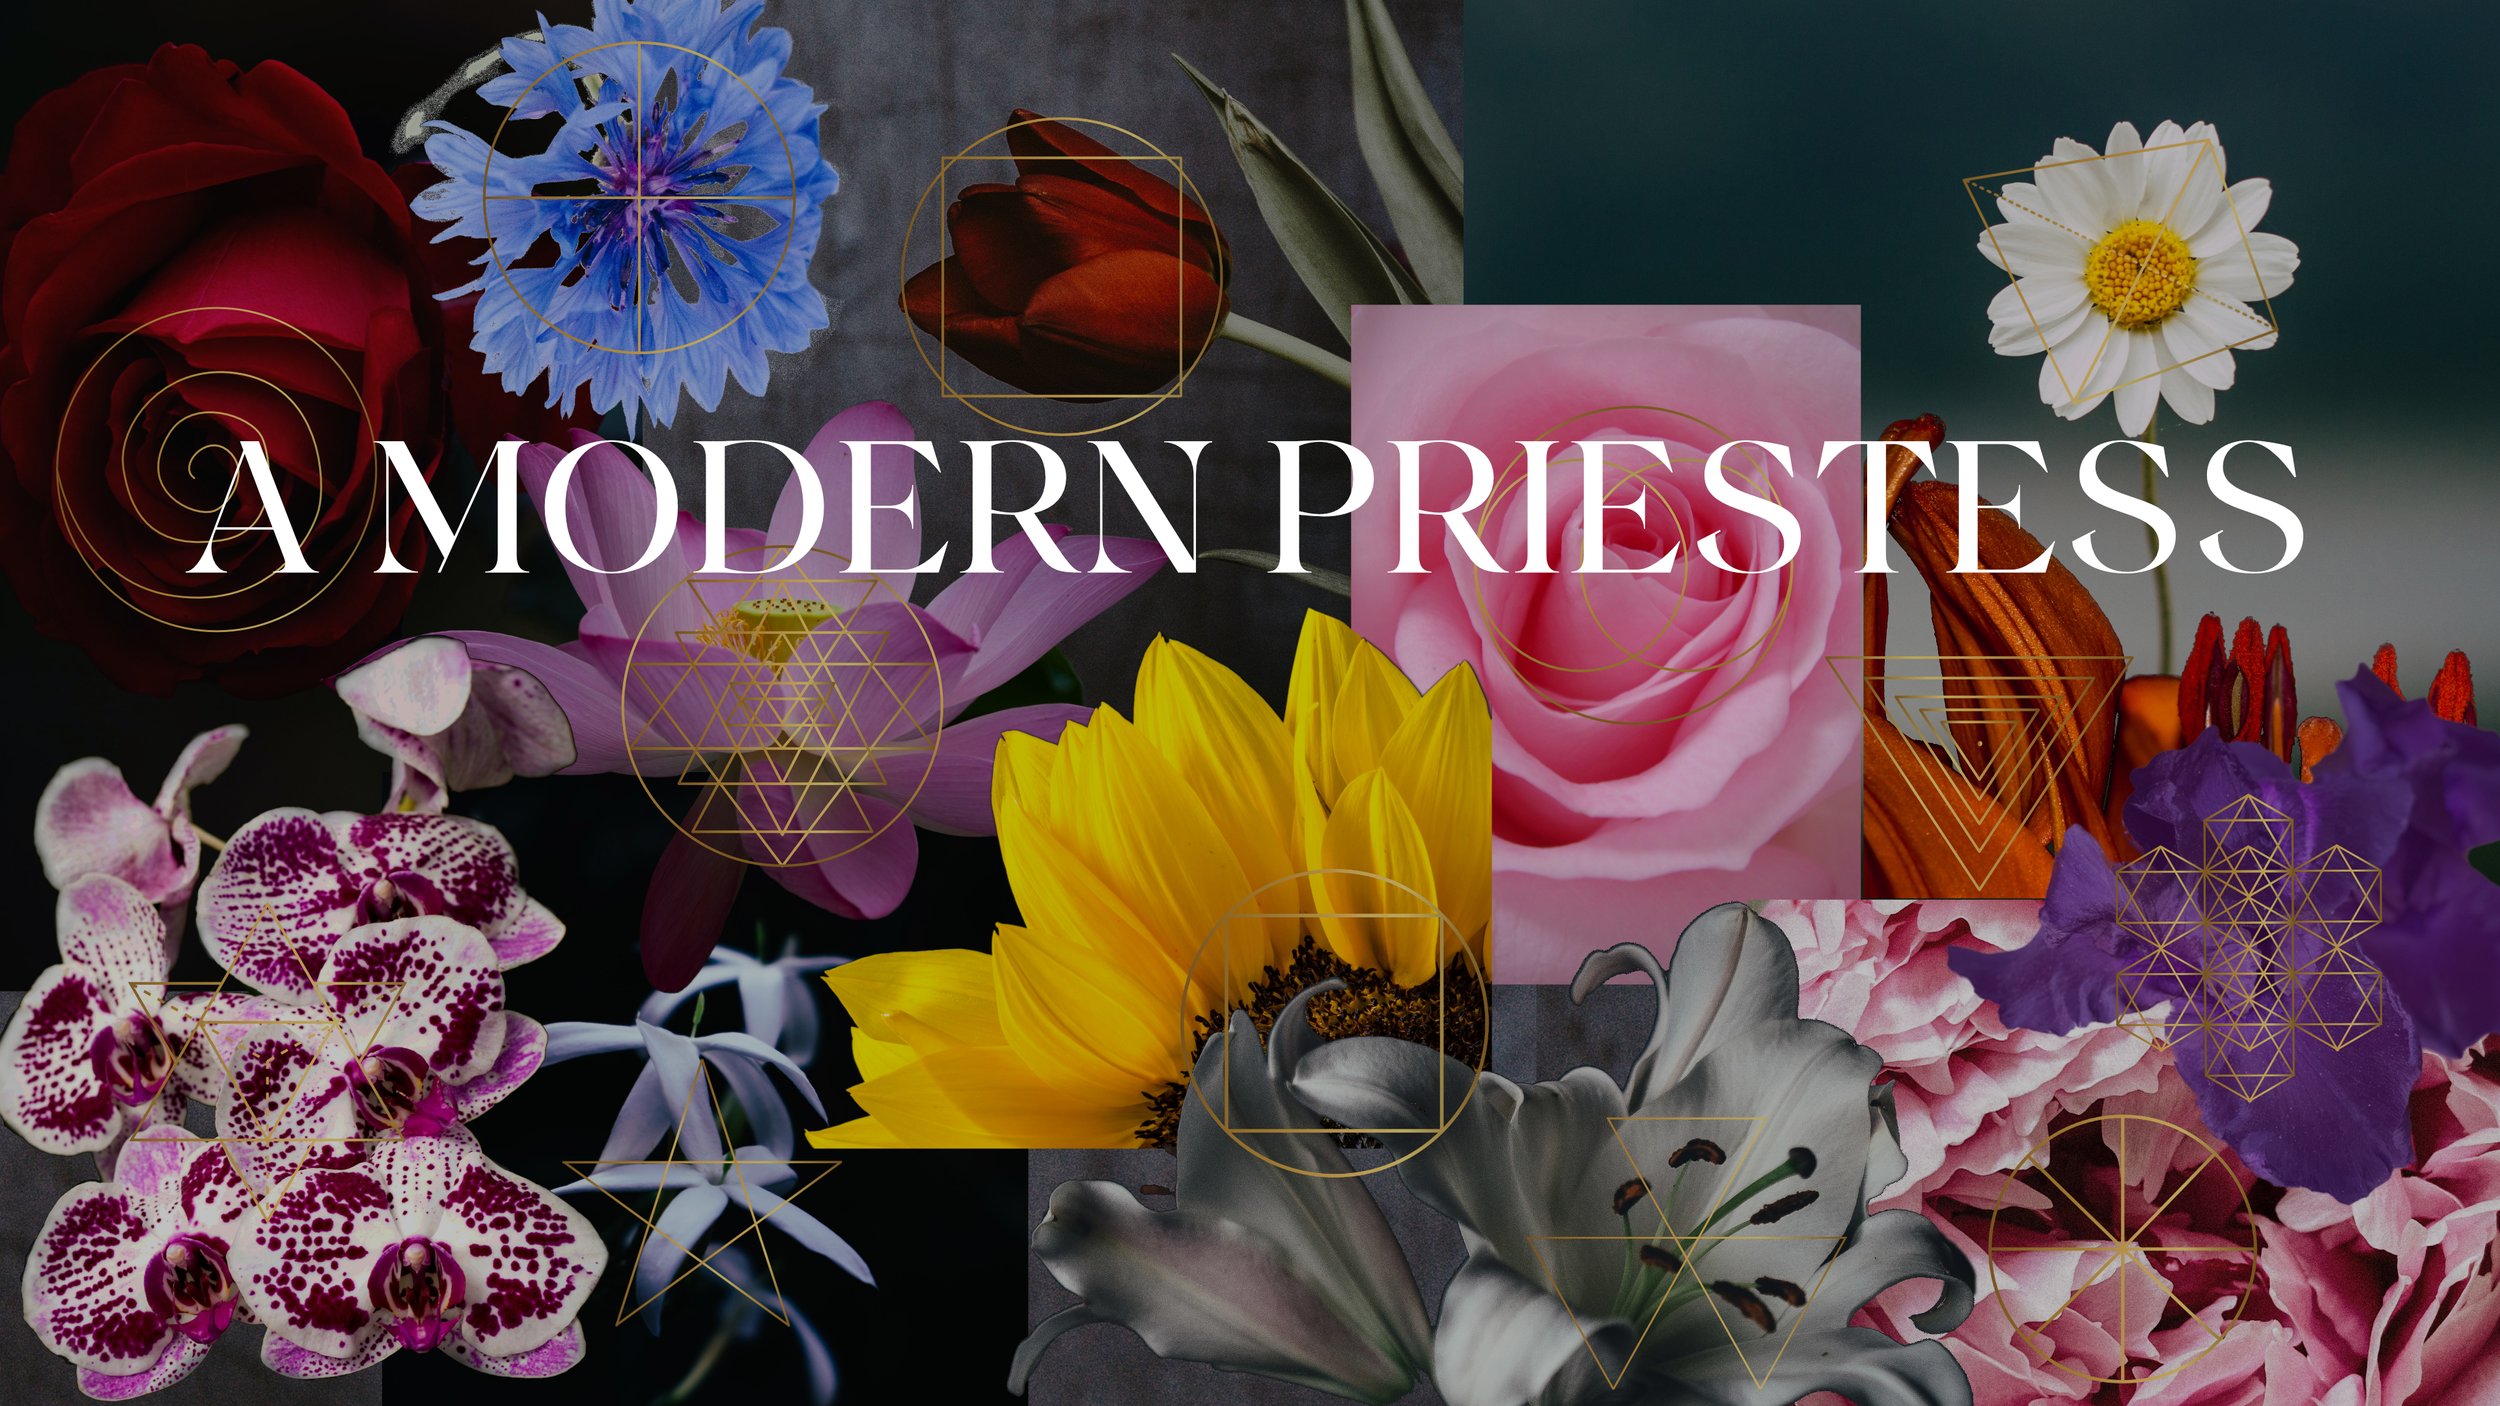 a modern priestess home collage.jpg